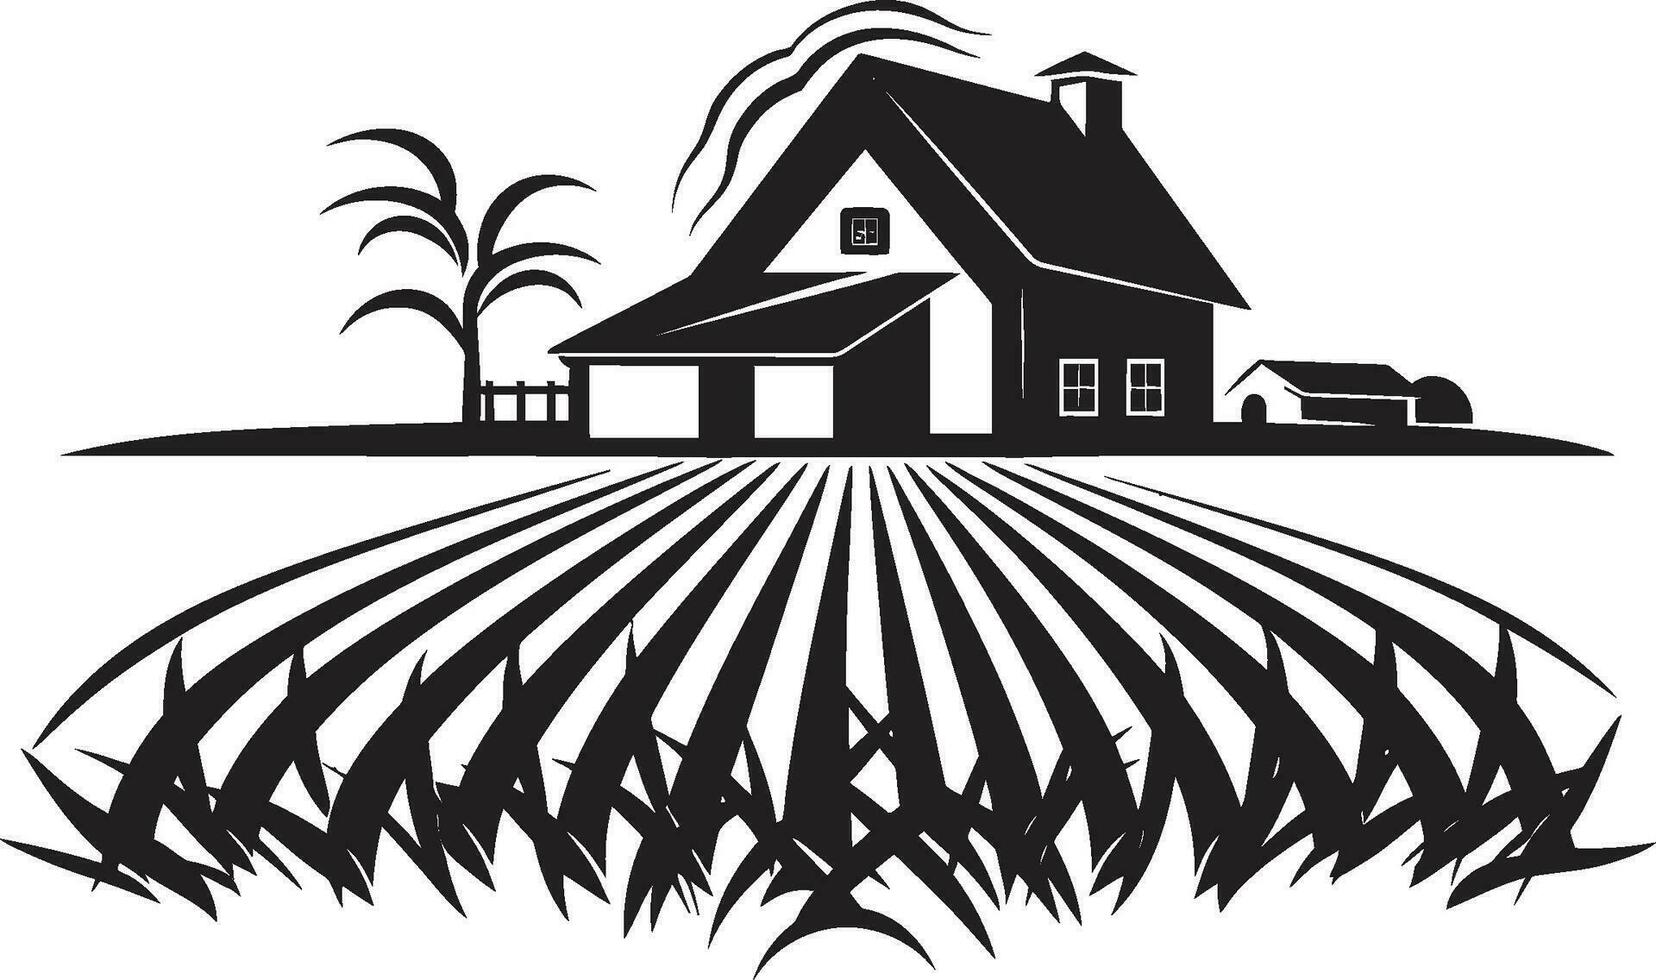 oogst oase residentie boeren boerderij embleem in vector platteland woning Mark boerderij ontwerp vector logo